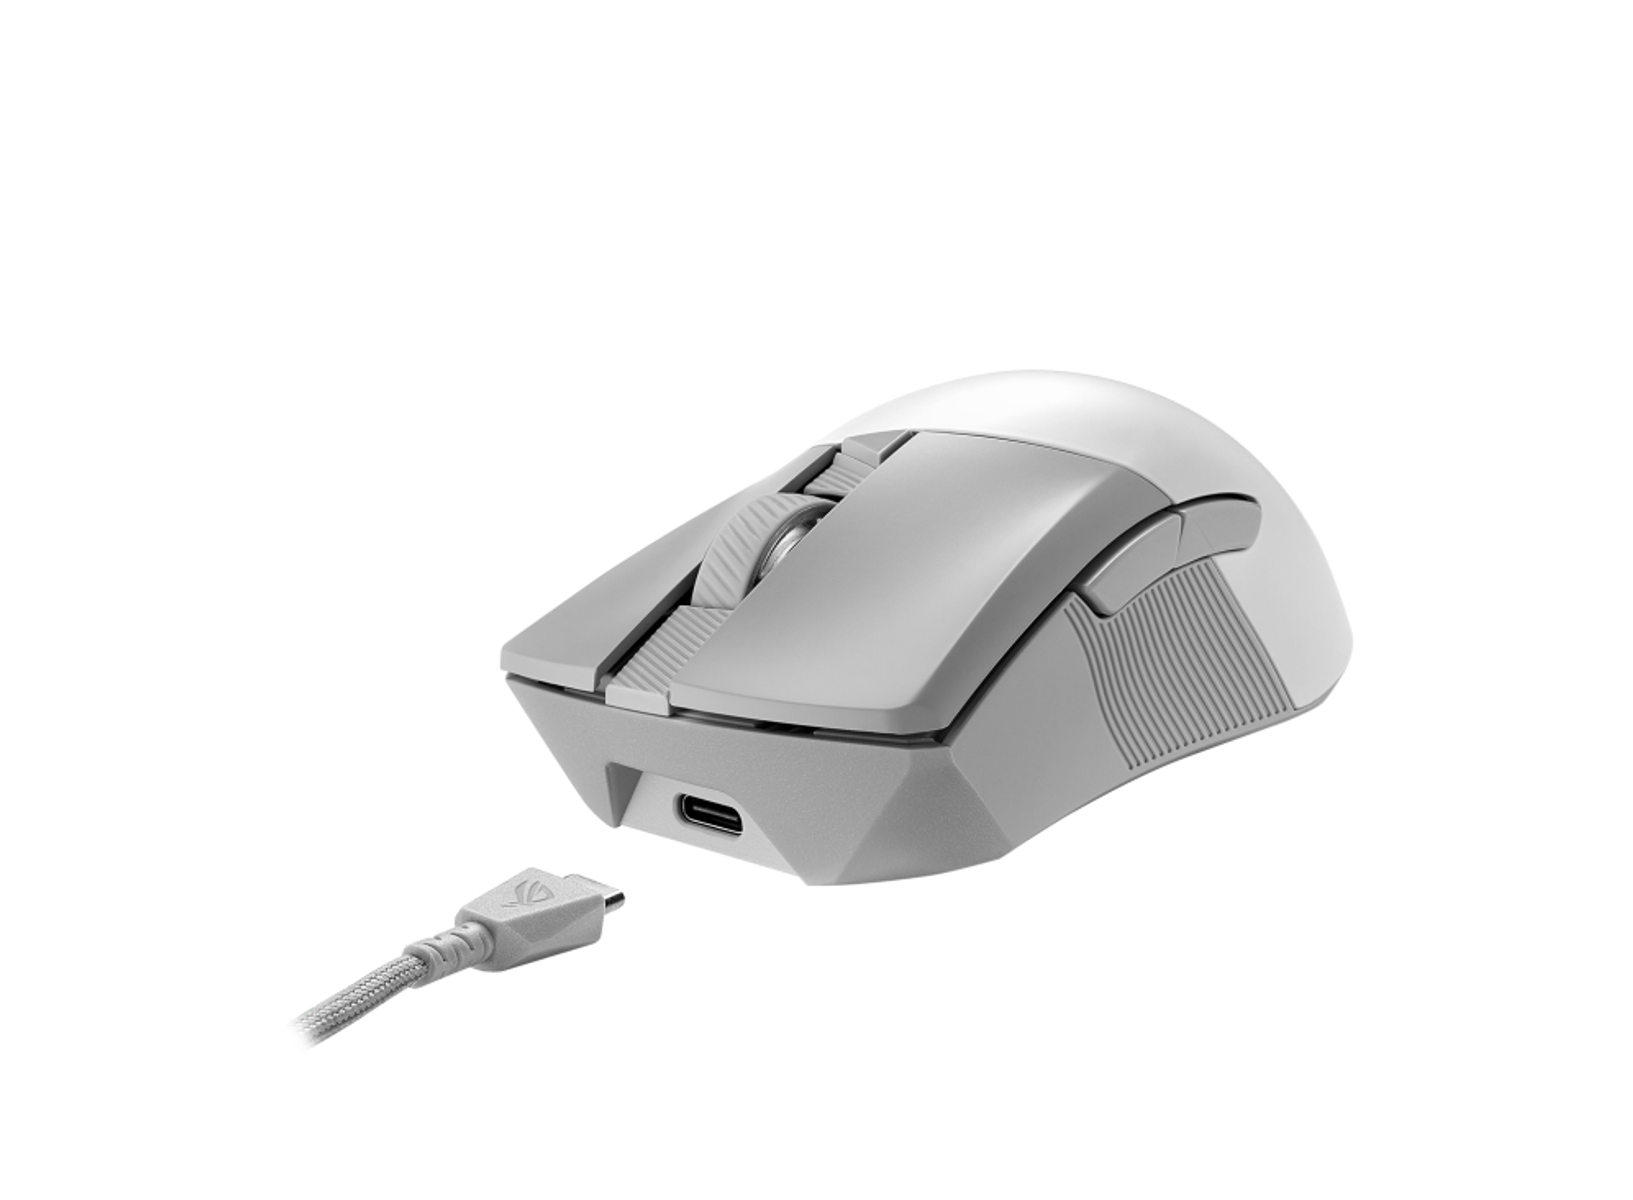 ASUS Gladius III Wireless Aimpoint Gaming Maus, Weiß White